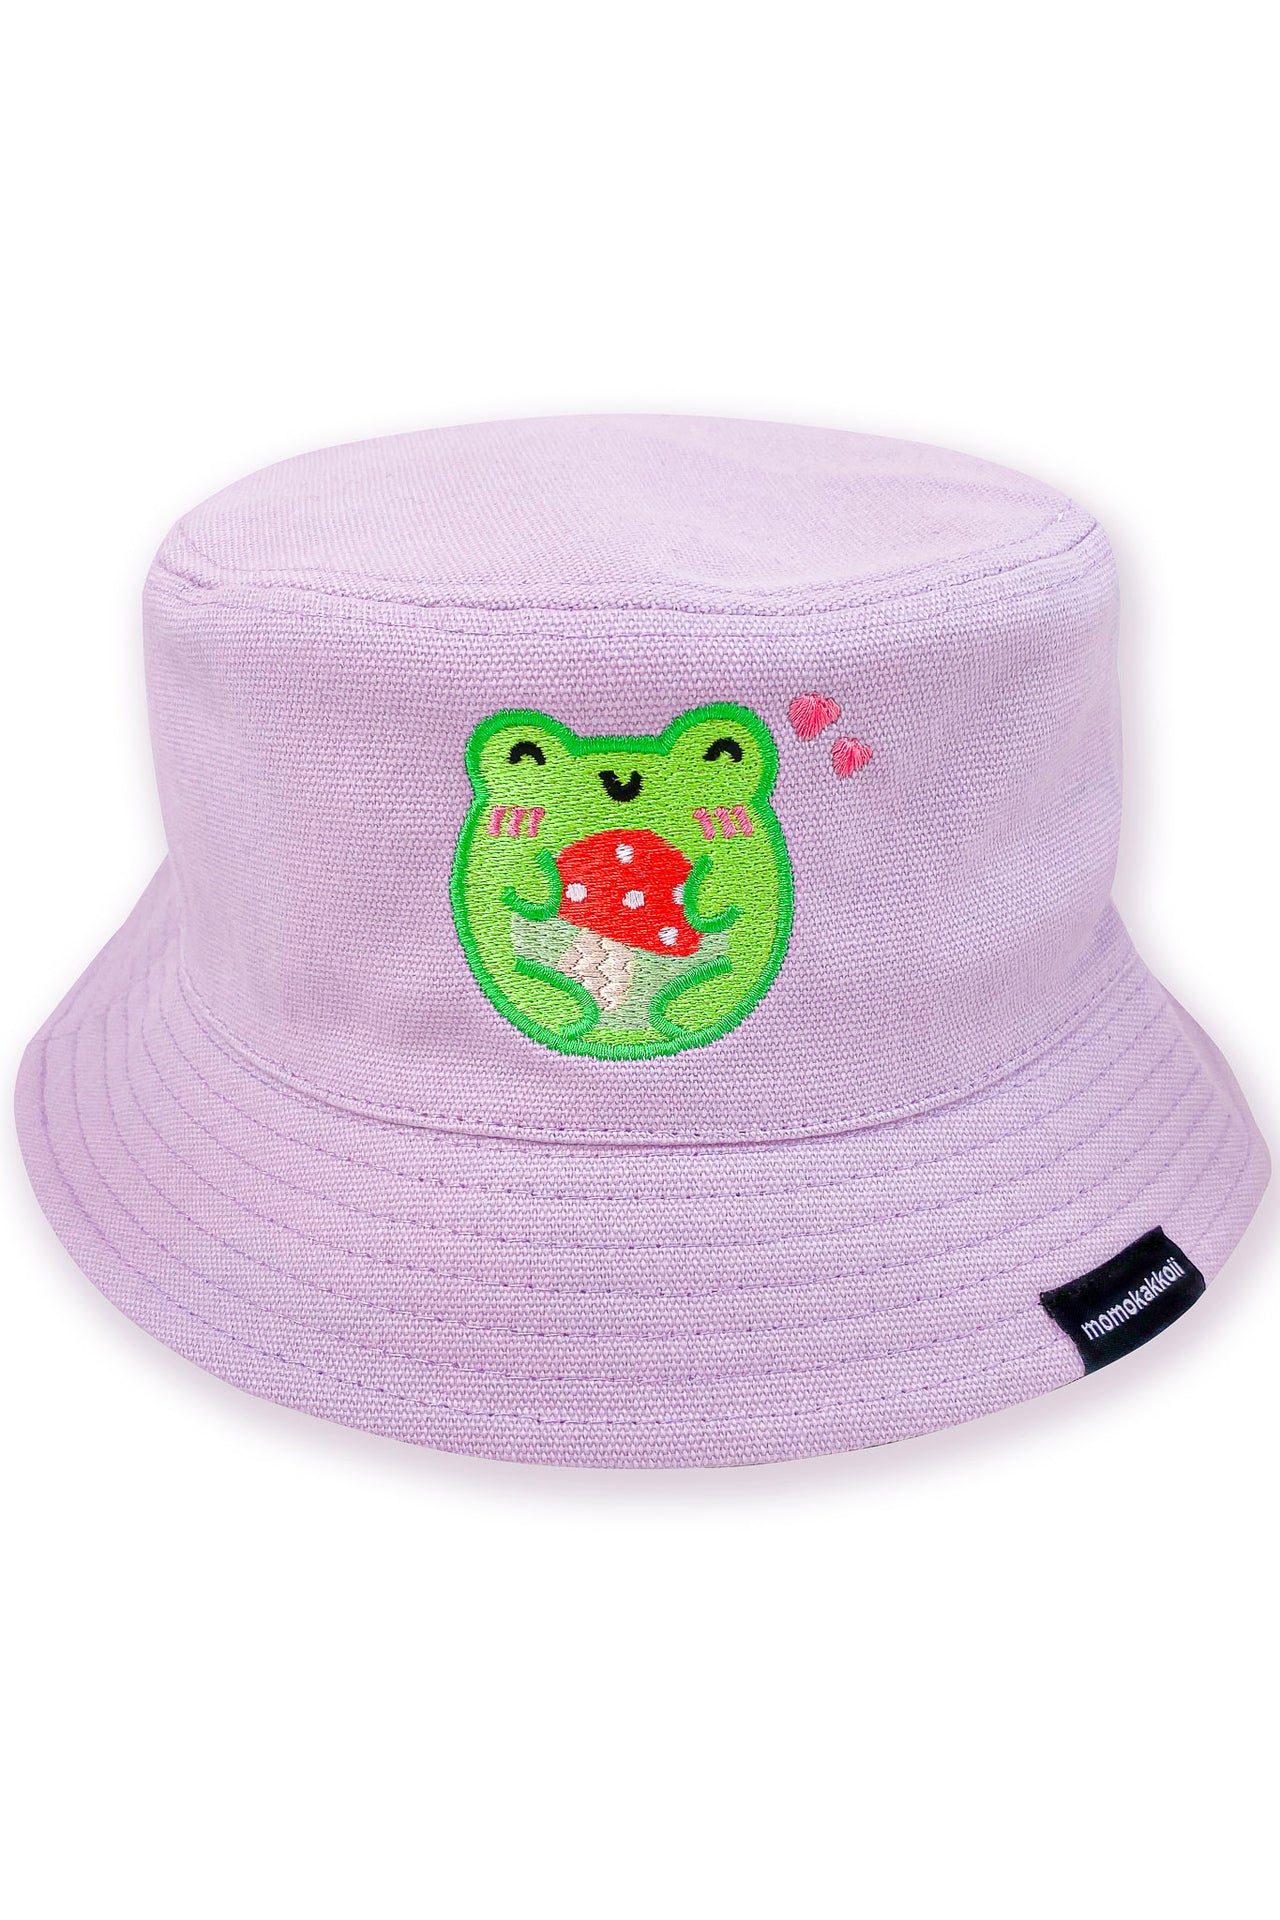 Frog Mushroom Hug Embroidered Bucket Hat - Momokakkoii